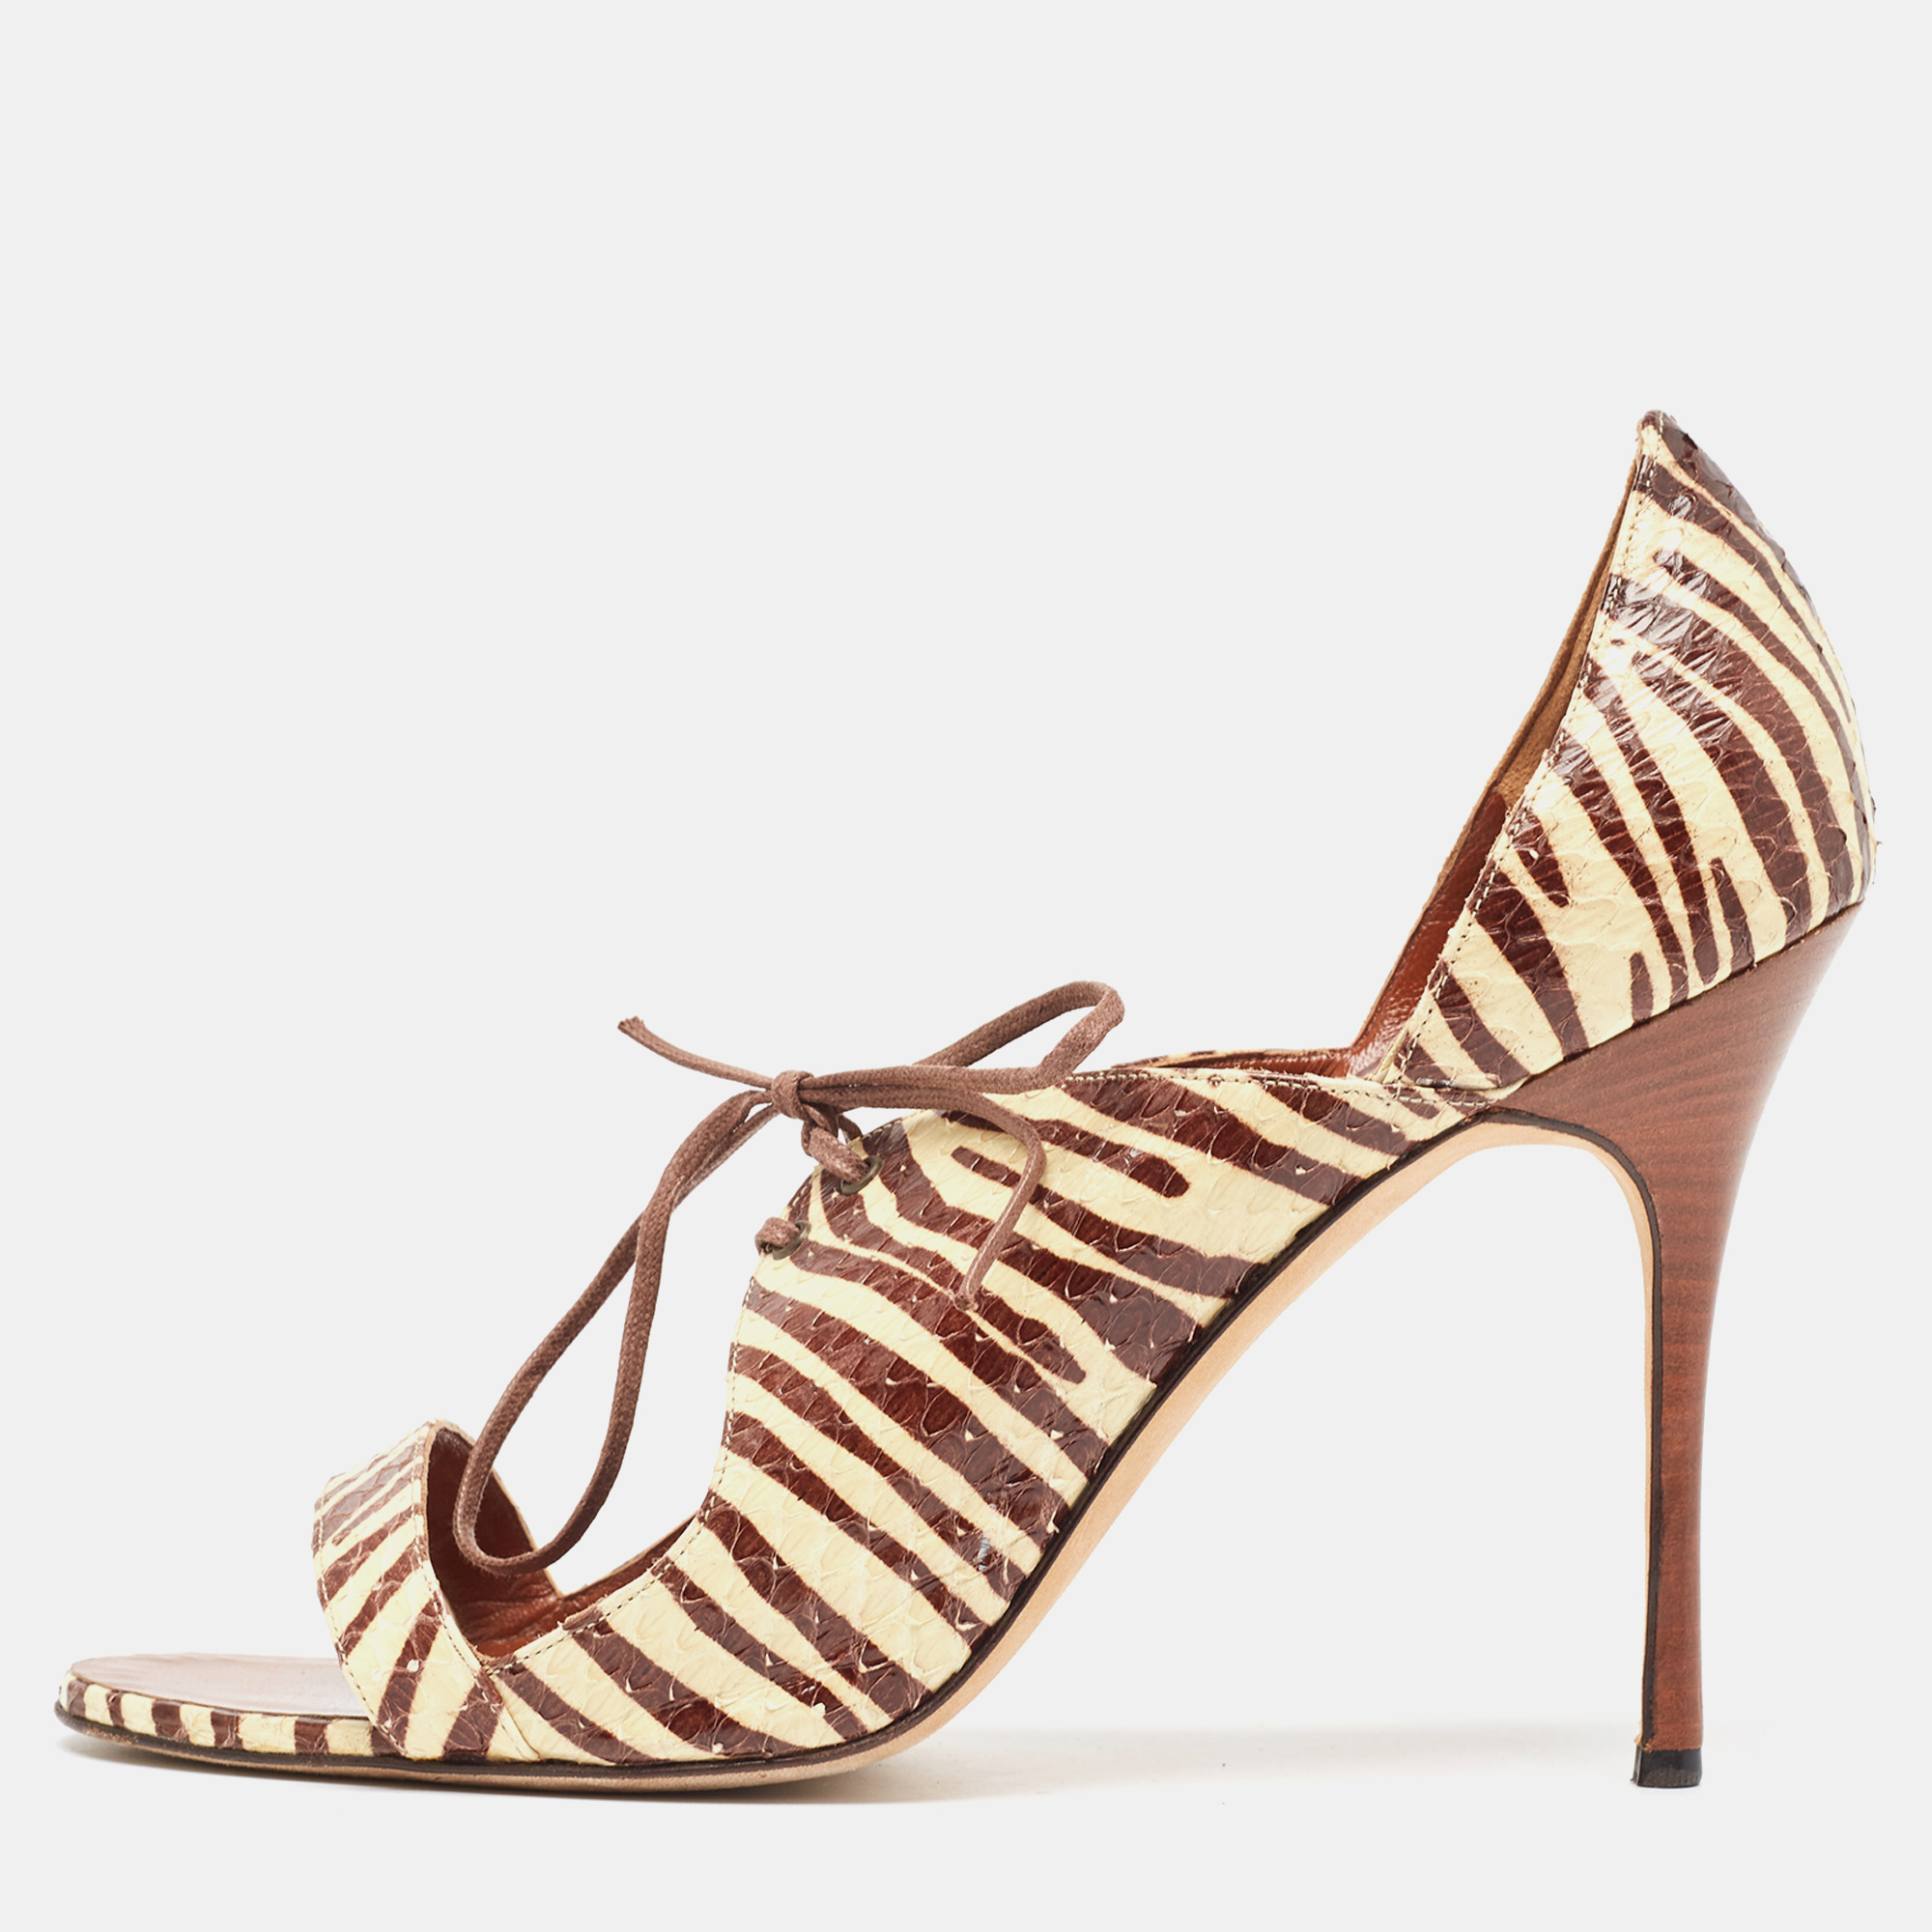 Manolo blahnik cream/brown printed python lace up sandals size 40